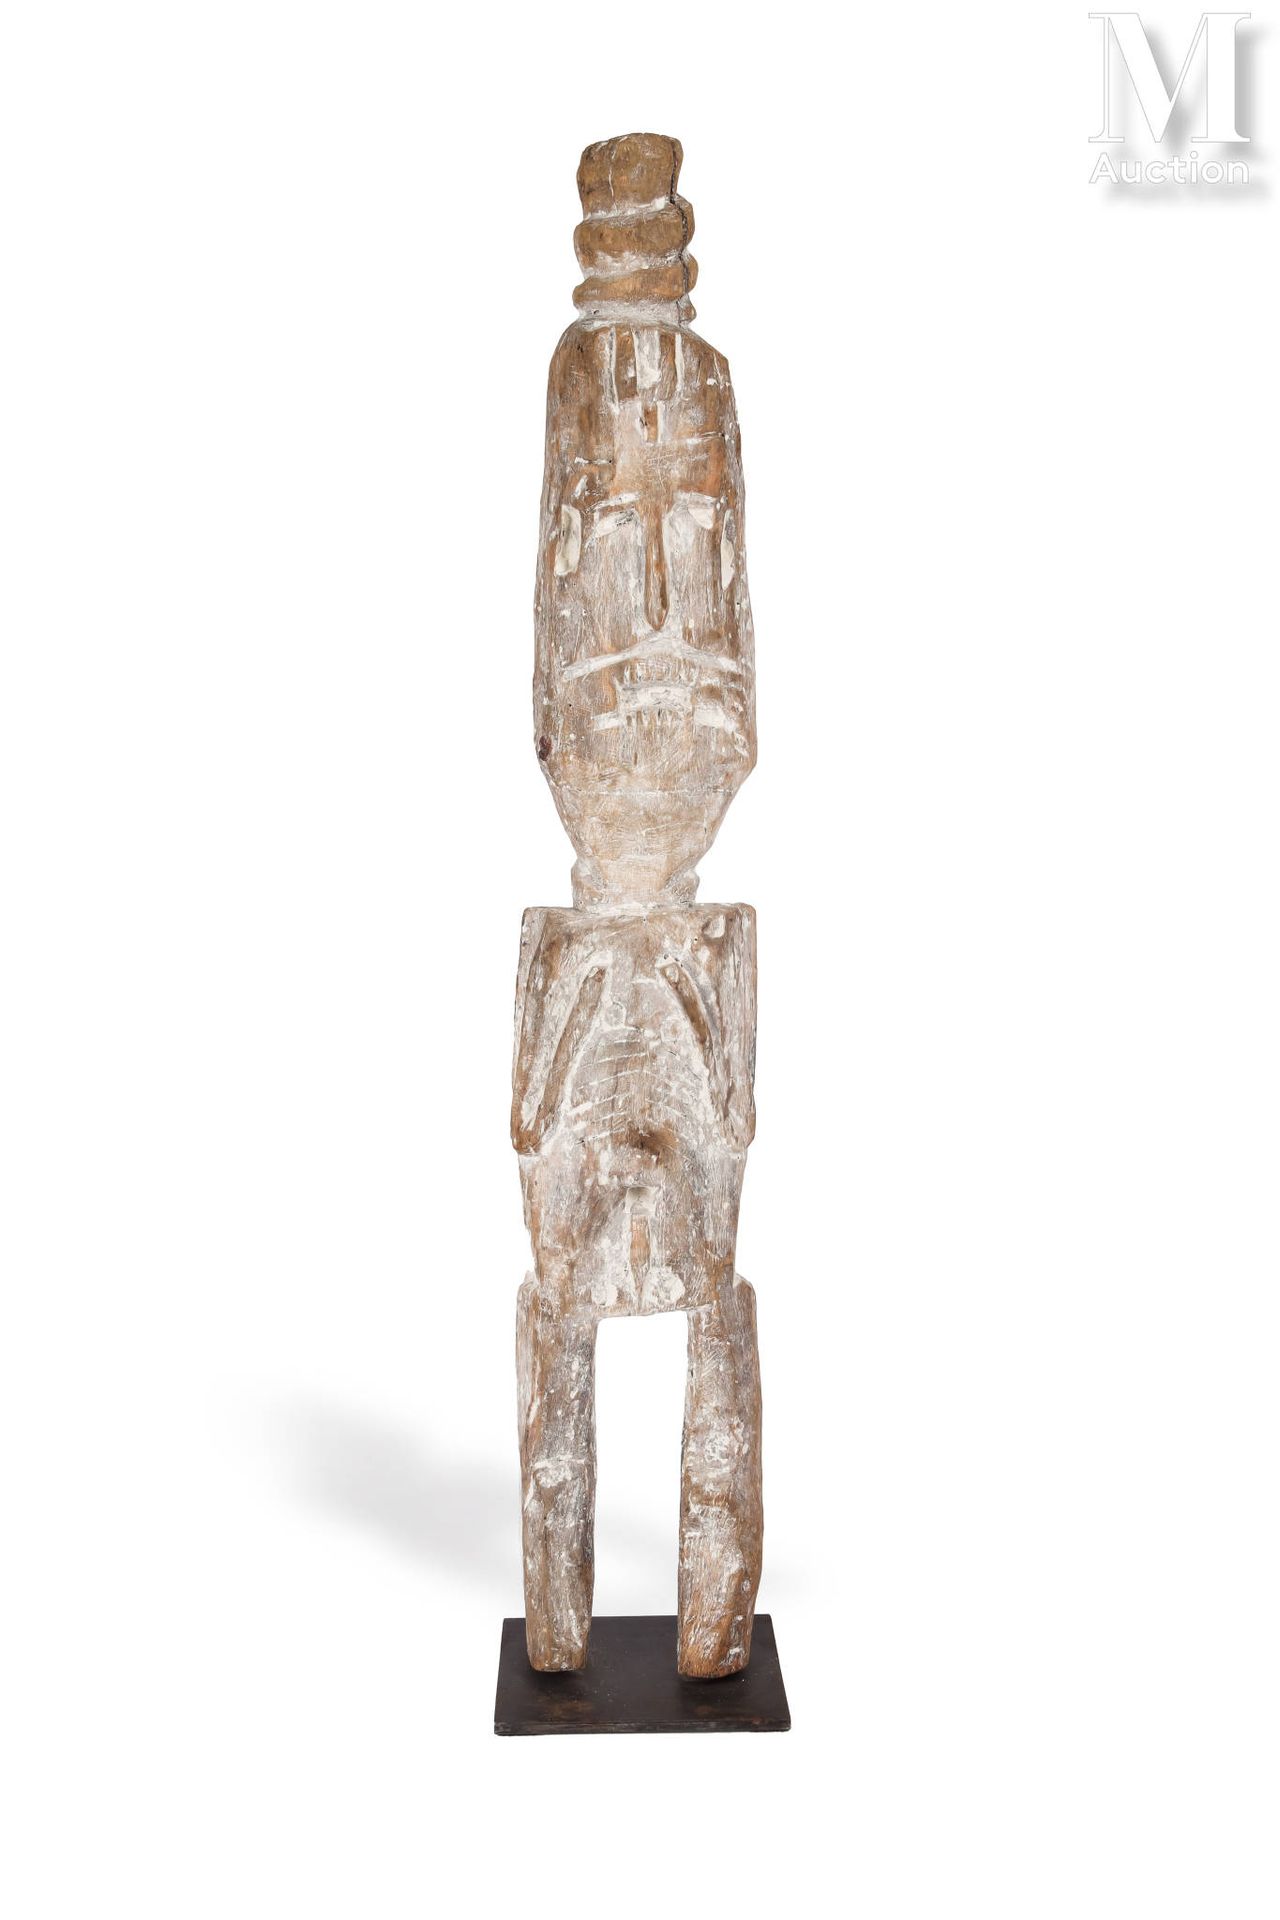 Statue masculine 肋骨上有刻痕，脸部拉长，表情愤怒或恍惚
木质、白色粘土痕迹、白色粘土陈旧的铜锈和岁月的痕迹 
尼泊尔
93 x 14.5 厘米